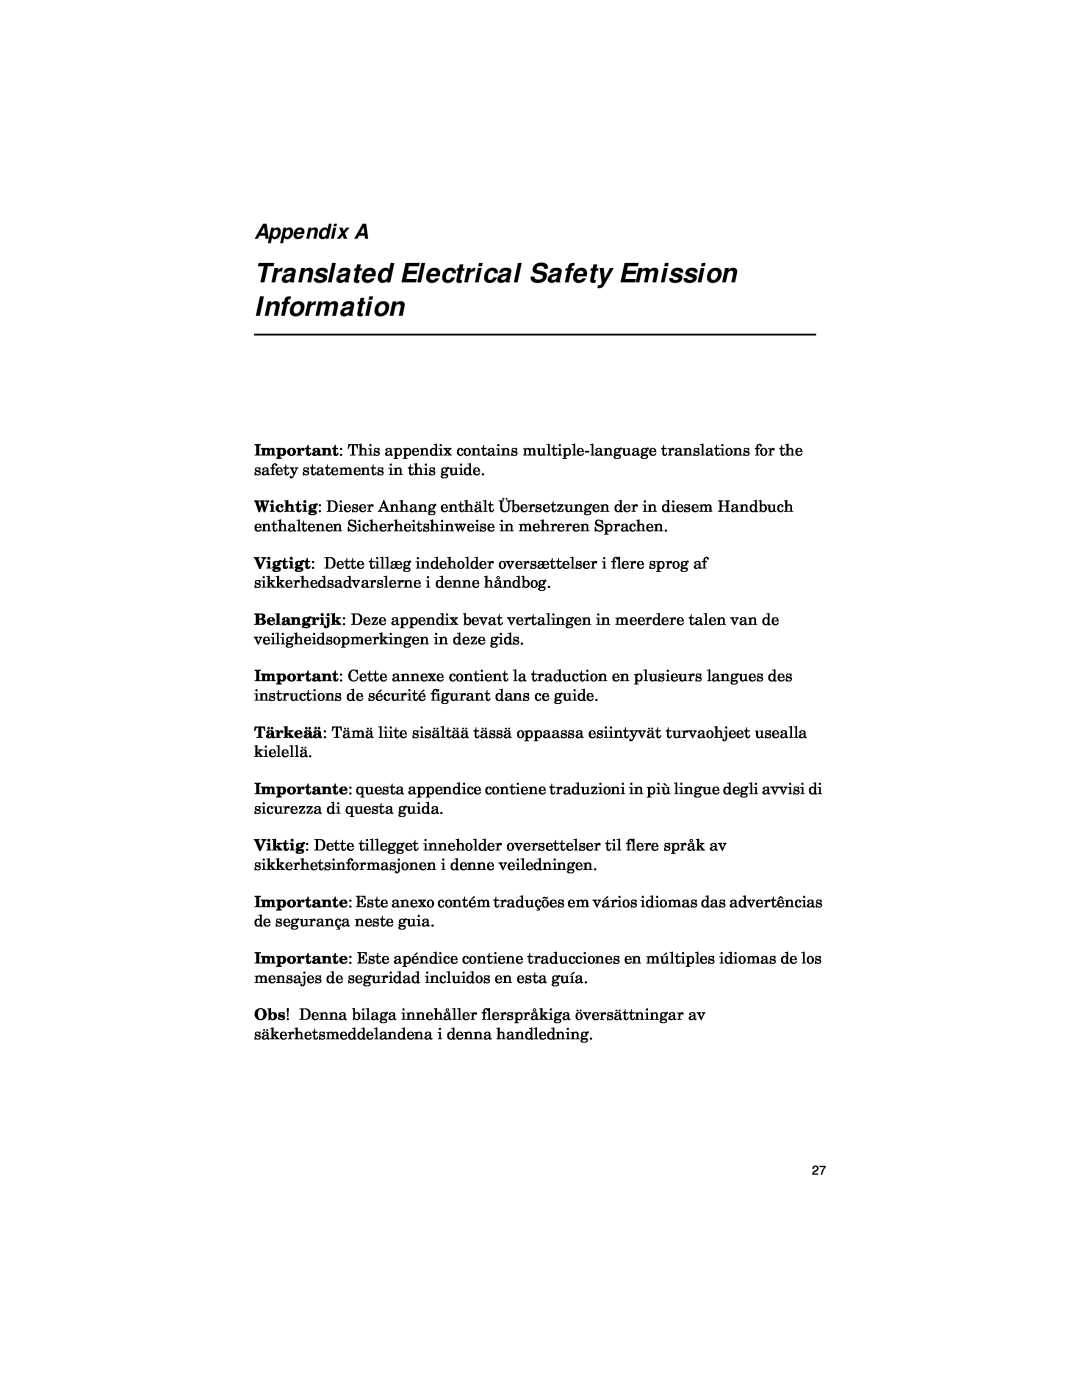 Allied Telesis ATFS705EFCSC60 manual Translated Electrical Safety Emission Information, Appendix A 